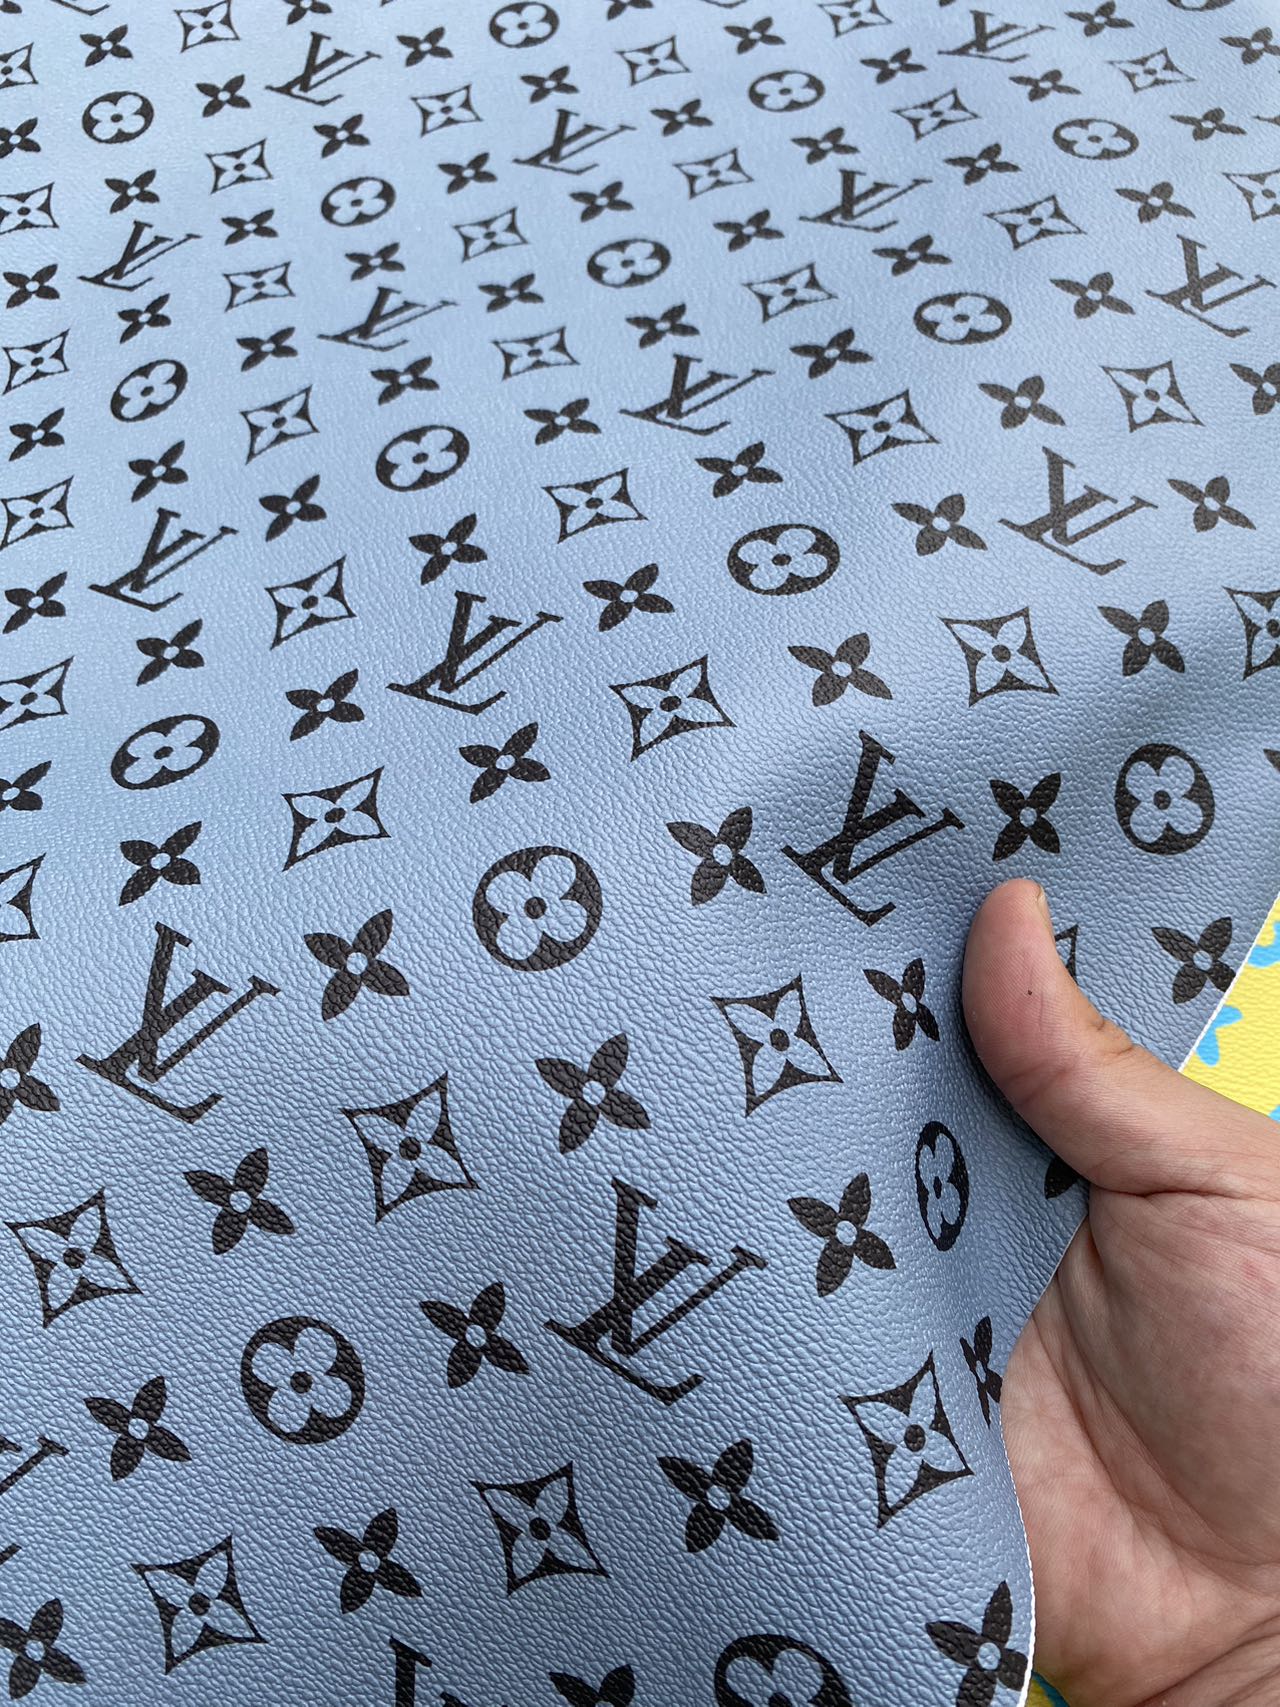 Premium Black Grey LV Monogram Vinyl Leather Fabric for Bag Handmade Sewing DIY